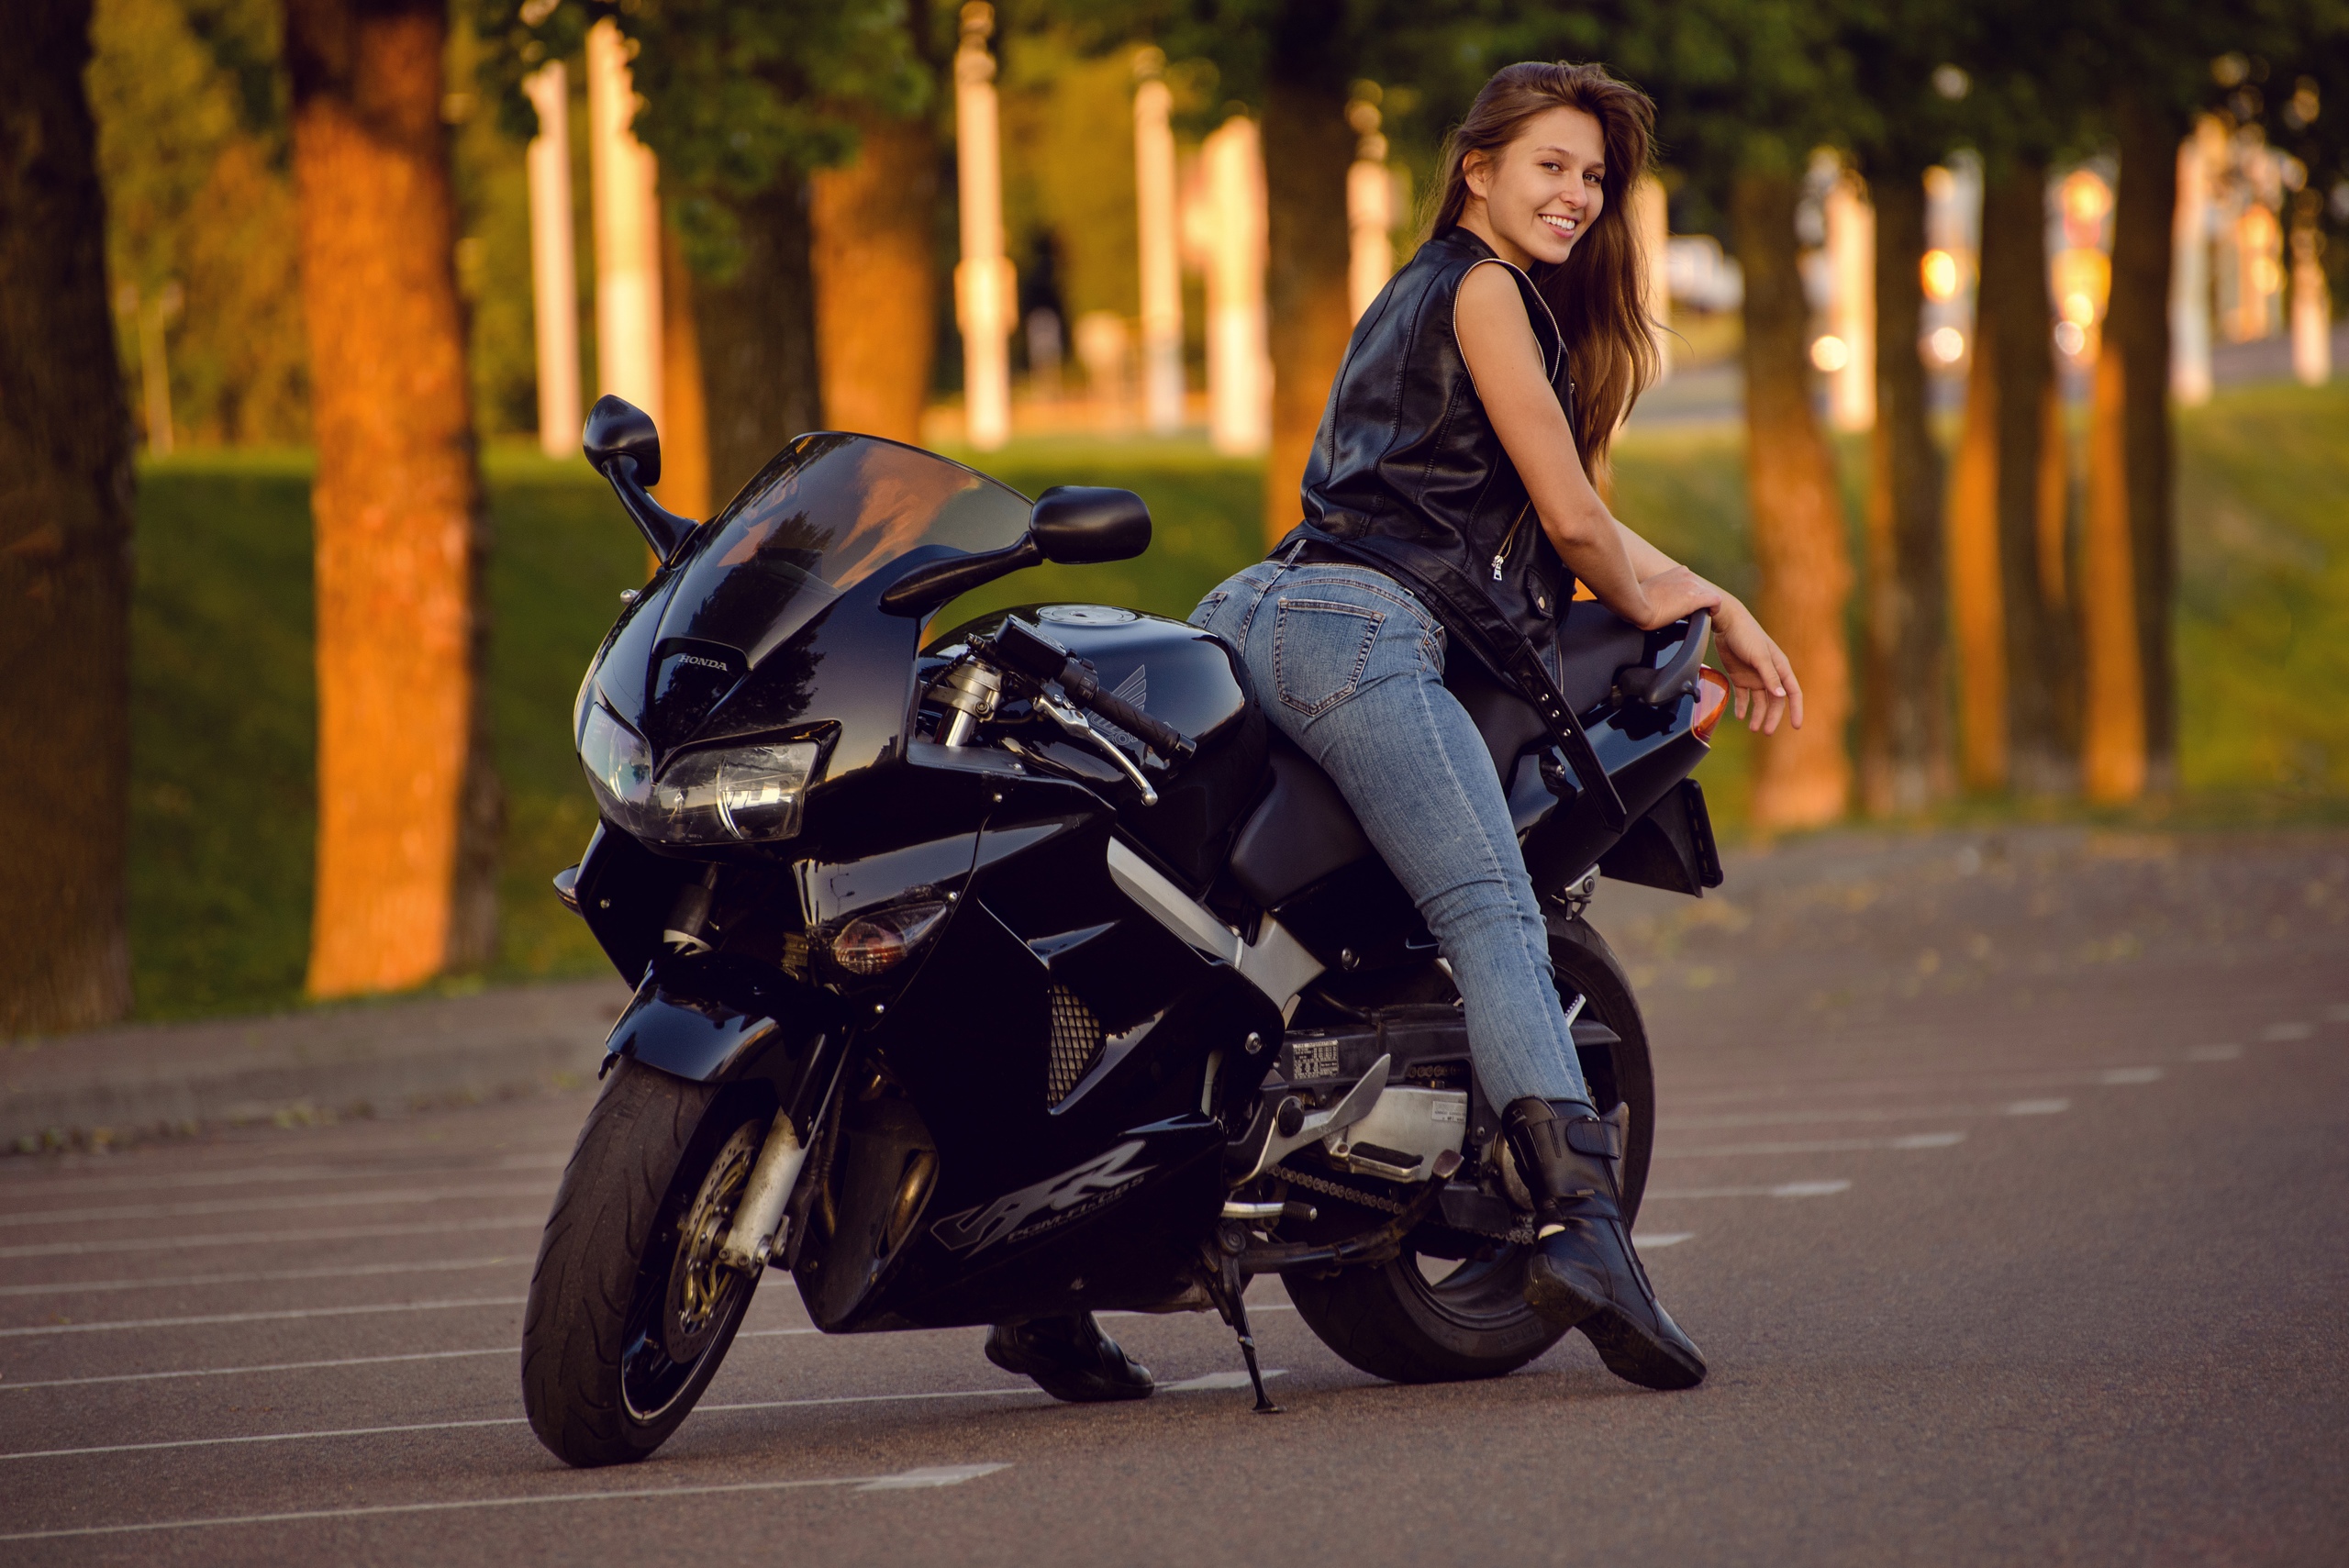 Alexei Shipulia Women Model Brunette Women Outdoors Women With Motorcycles Motorcycle Jeans Boots Le 2560x1709